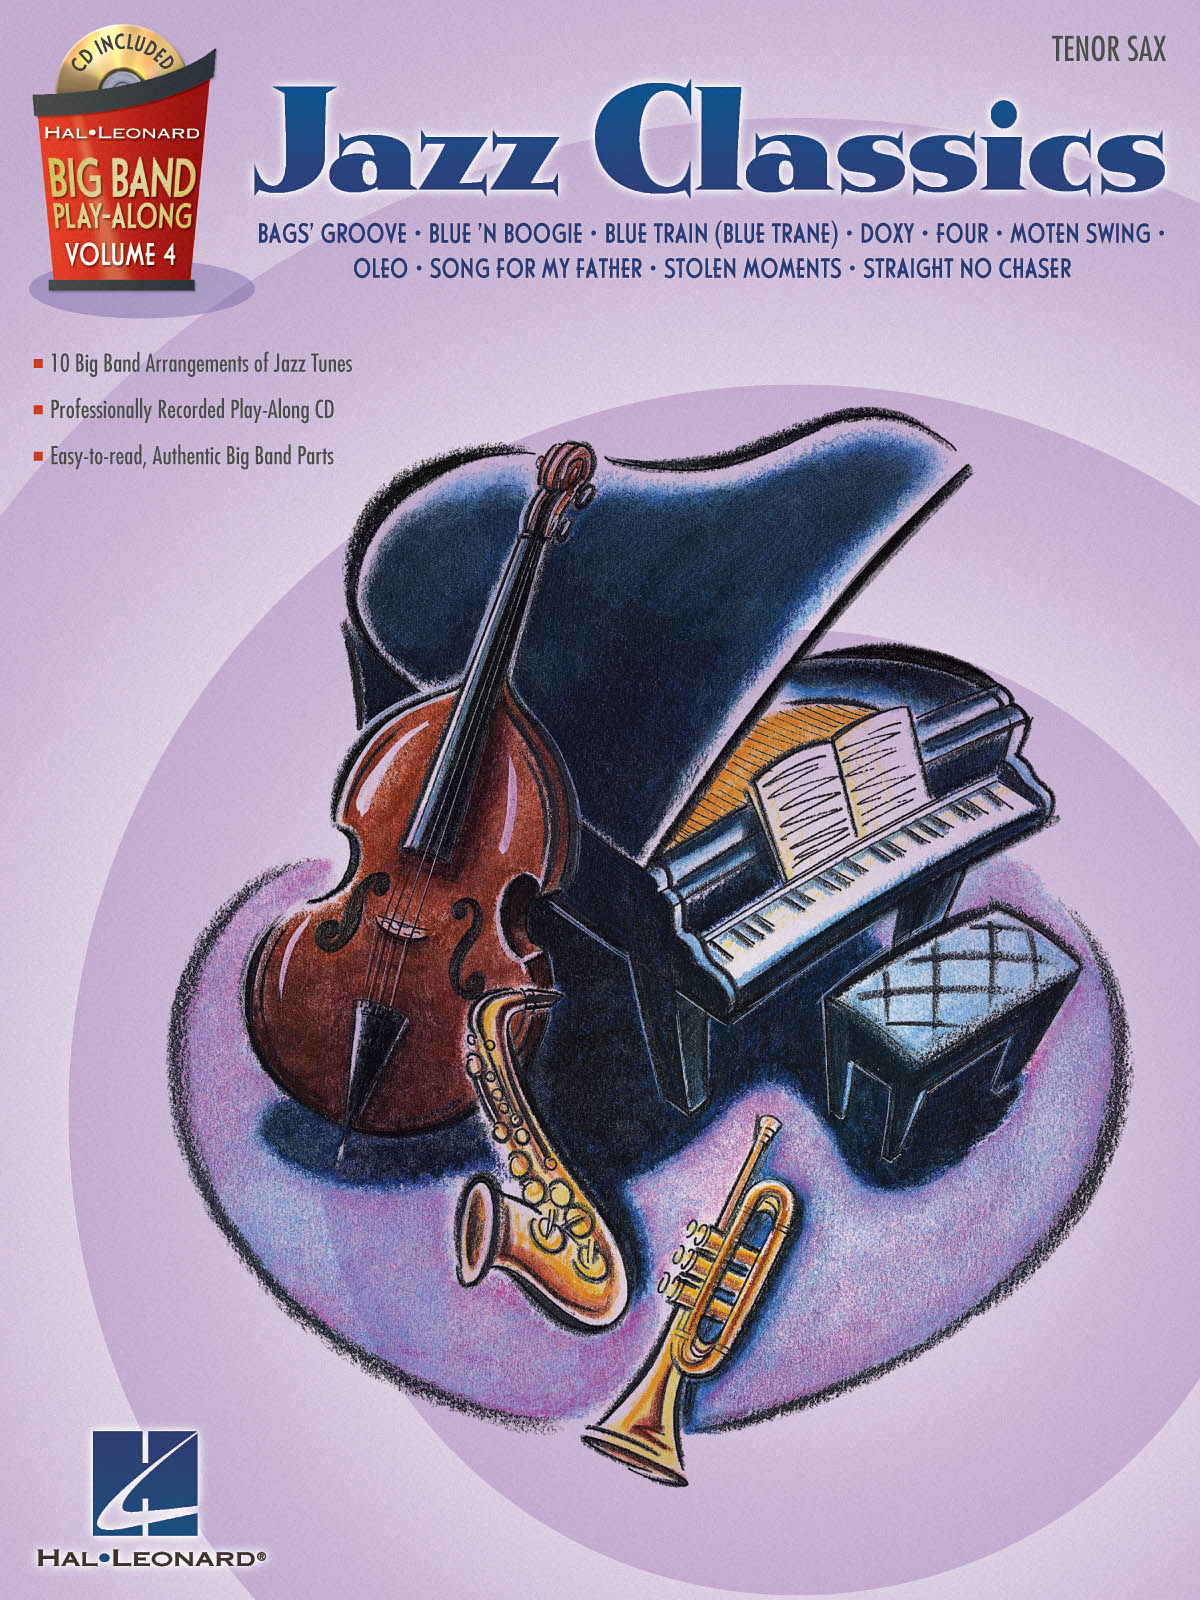 Big Band Play-Along Volume 4: Jazz Classics Tenor Sax